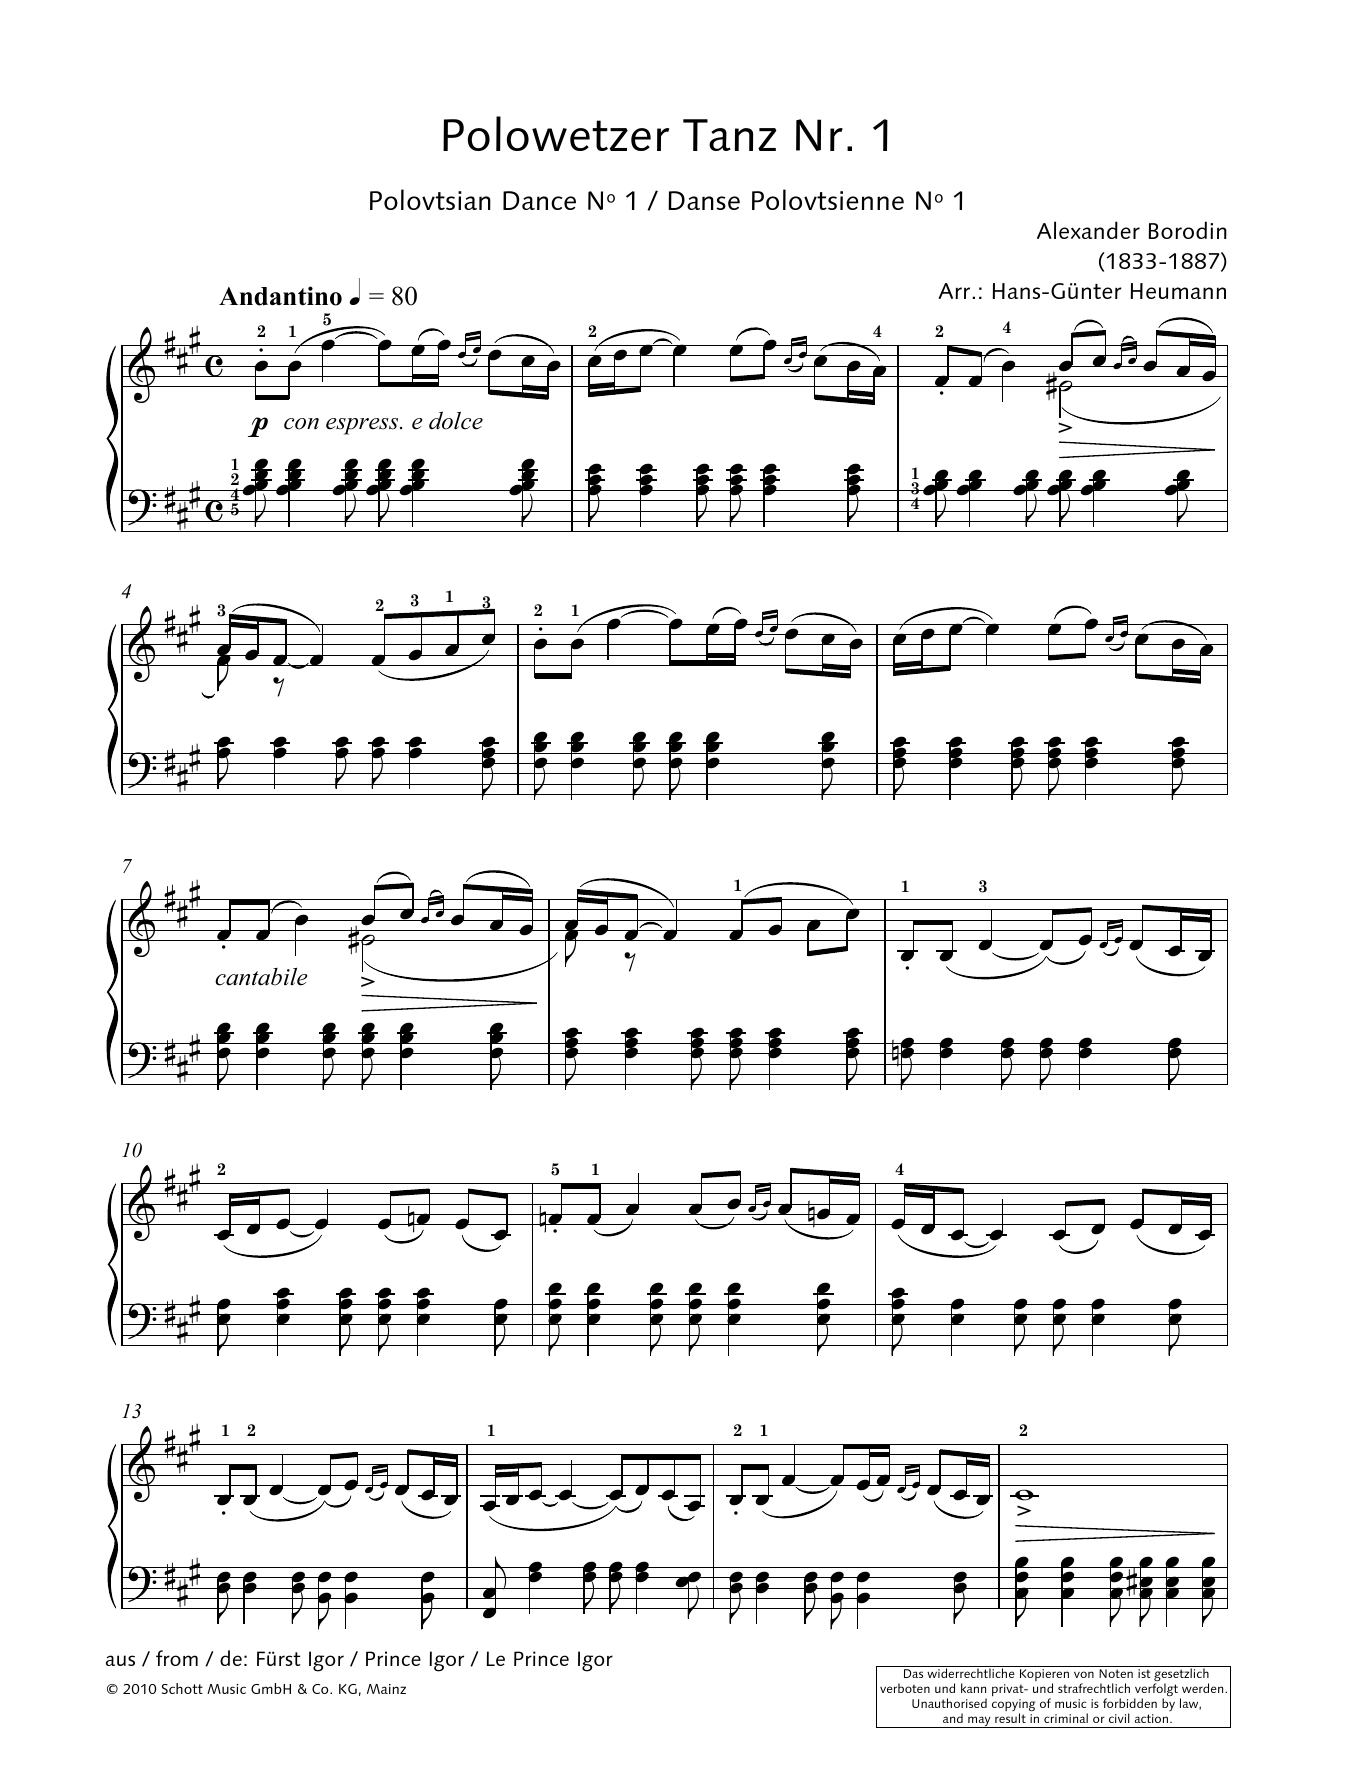 Hans-Gunter Heumann Polovtsian Dance No. 1 Sheet Music Notes & Chords for Piano Solo - Download or Print PDF